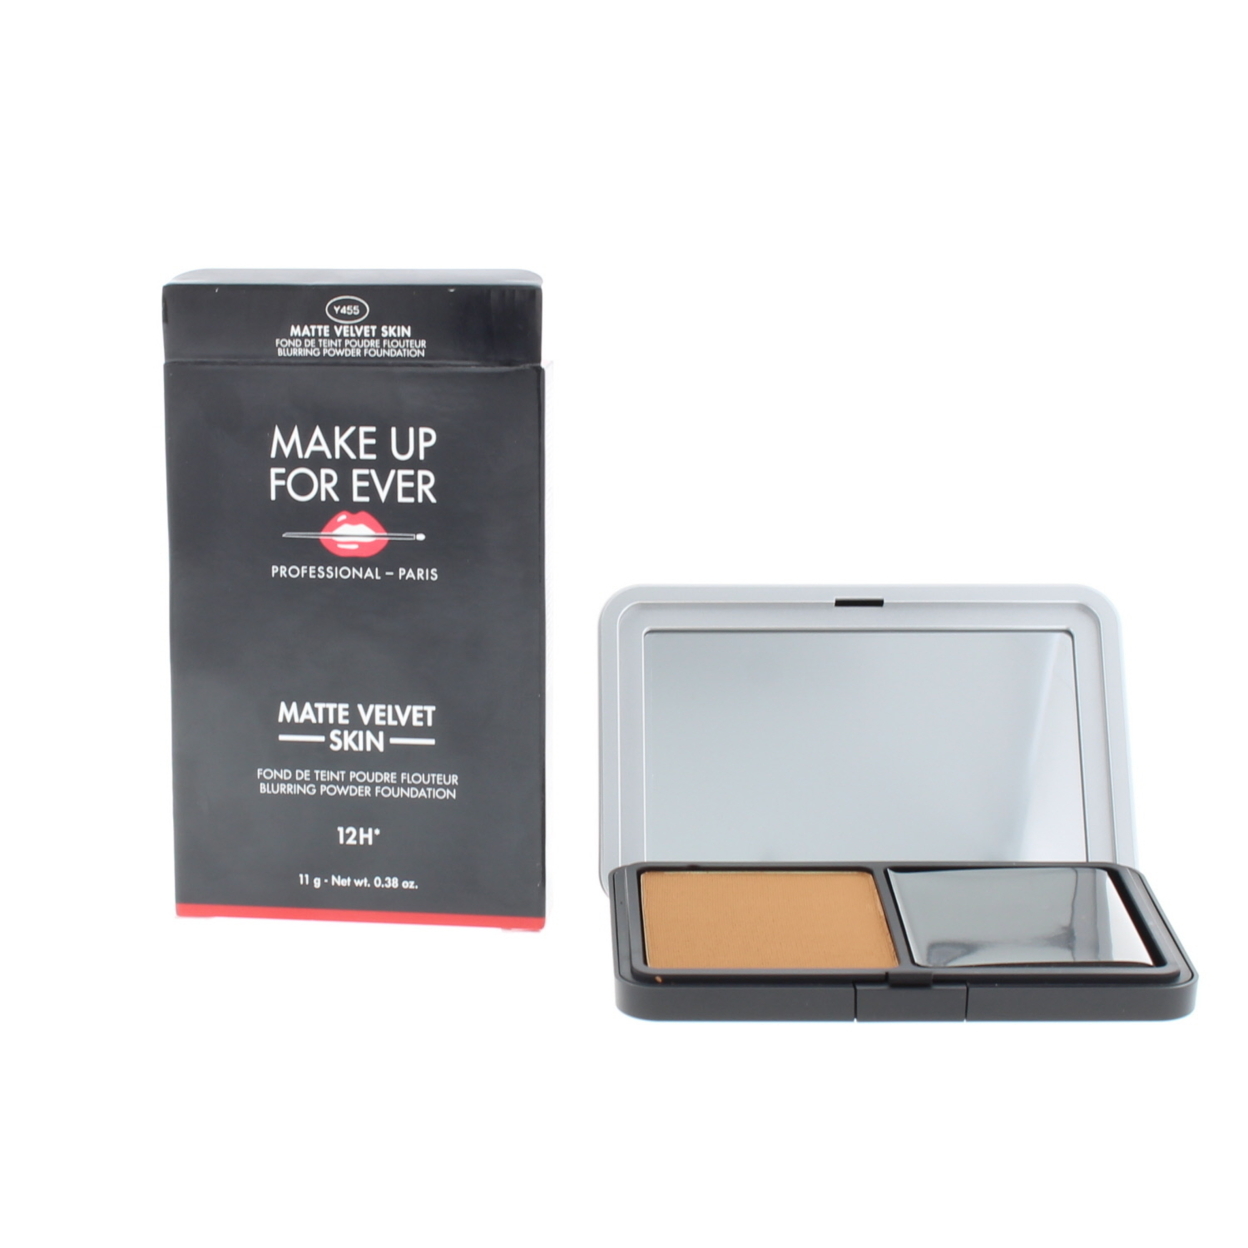 Make Up For Ever Make UpFor EverMatte Velvet Skin Powder Foundation 11g/0.38oz Shade Y455